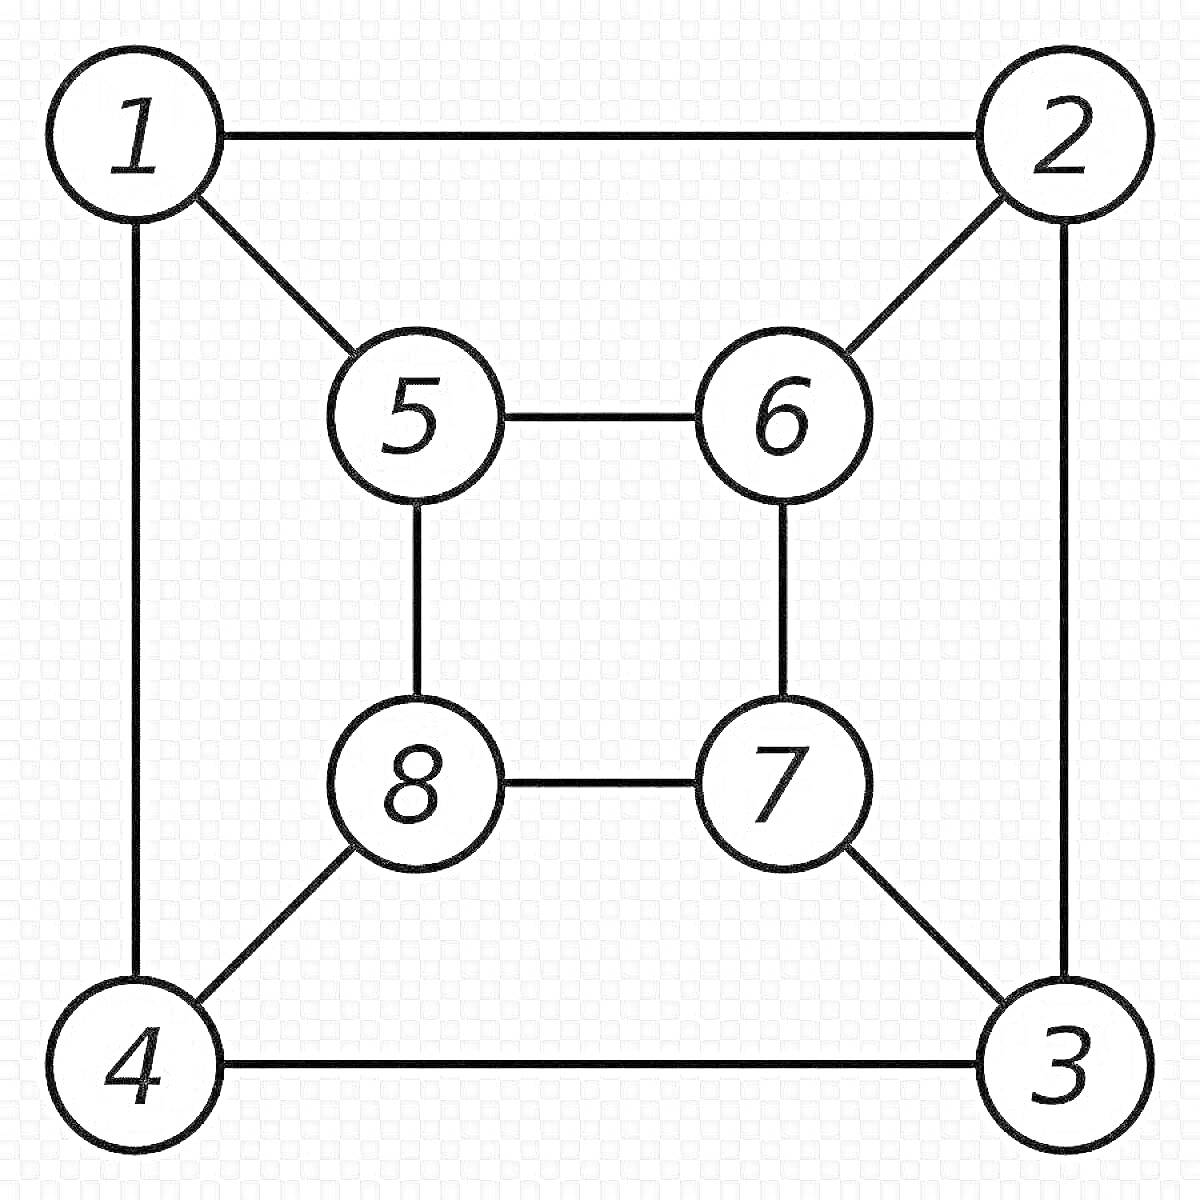 Раскраска граф с восемью вершинами, граф, восемь вершин, нумерация вершин, вершины с цифрами, рёбра графа, планарный граф